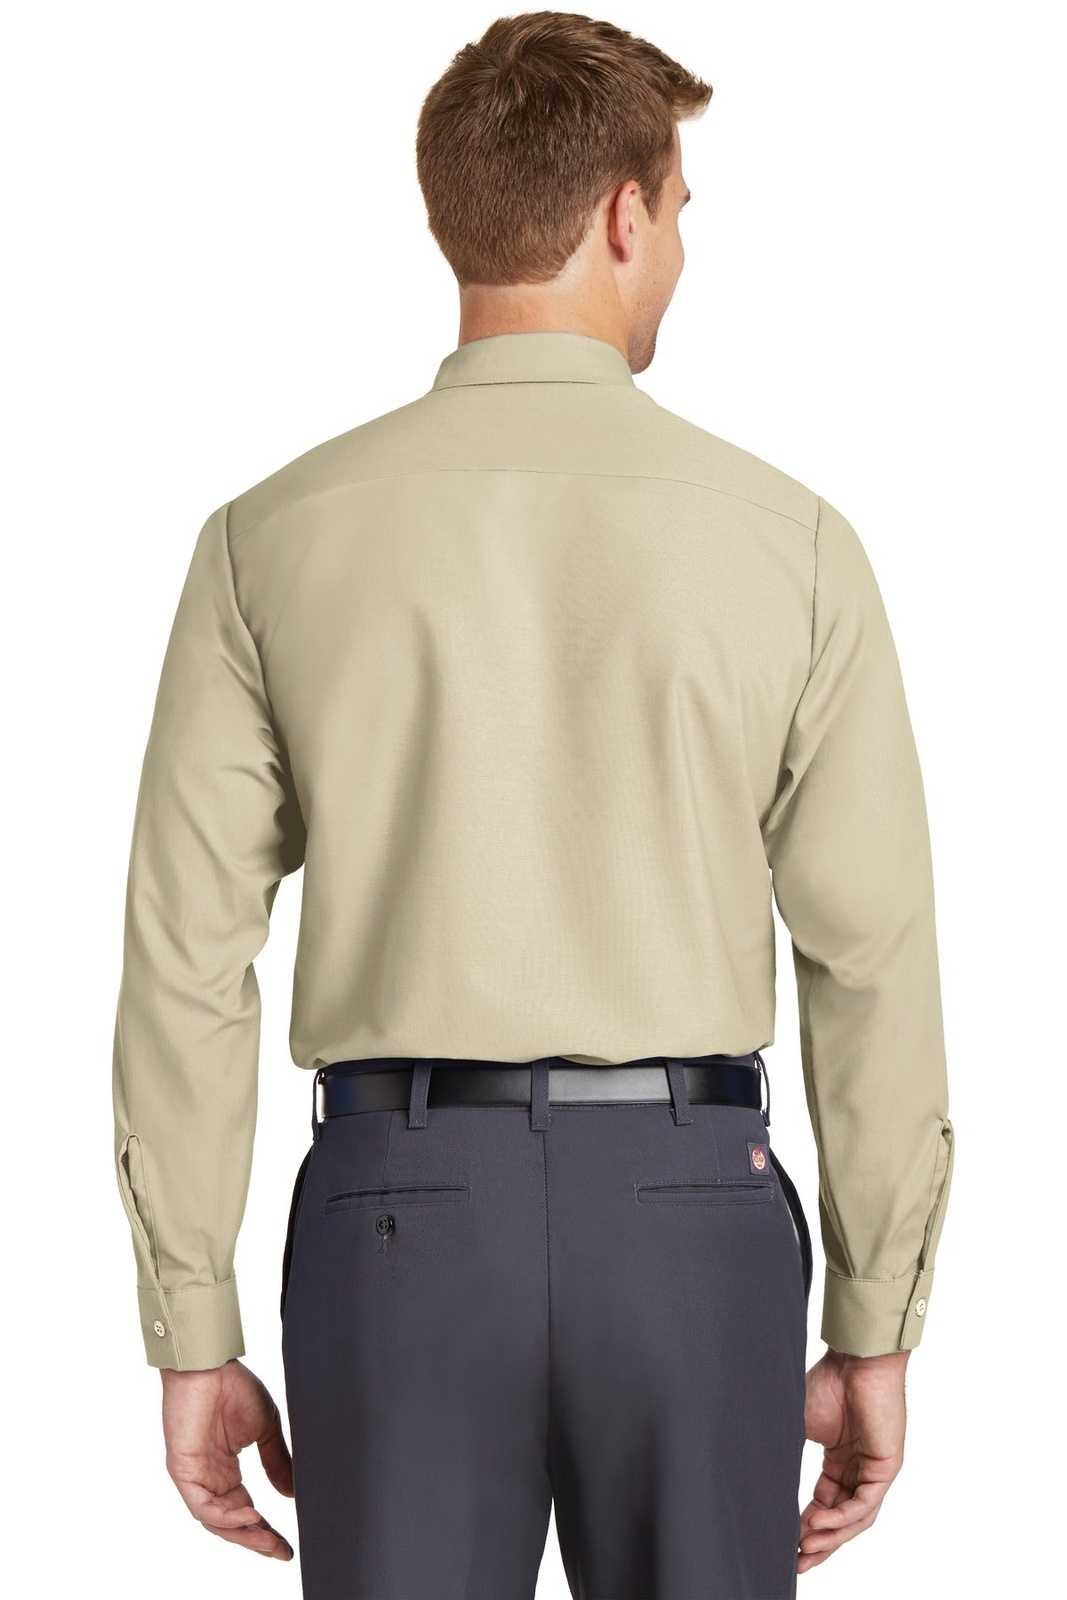 Red Kap SP14 Long Sleeve Industrial Work Shirt - Light Tan - HIT a Double - 2